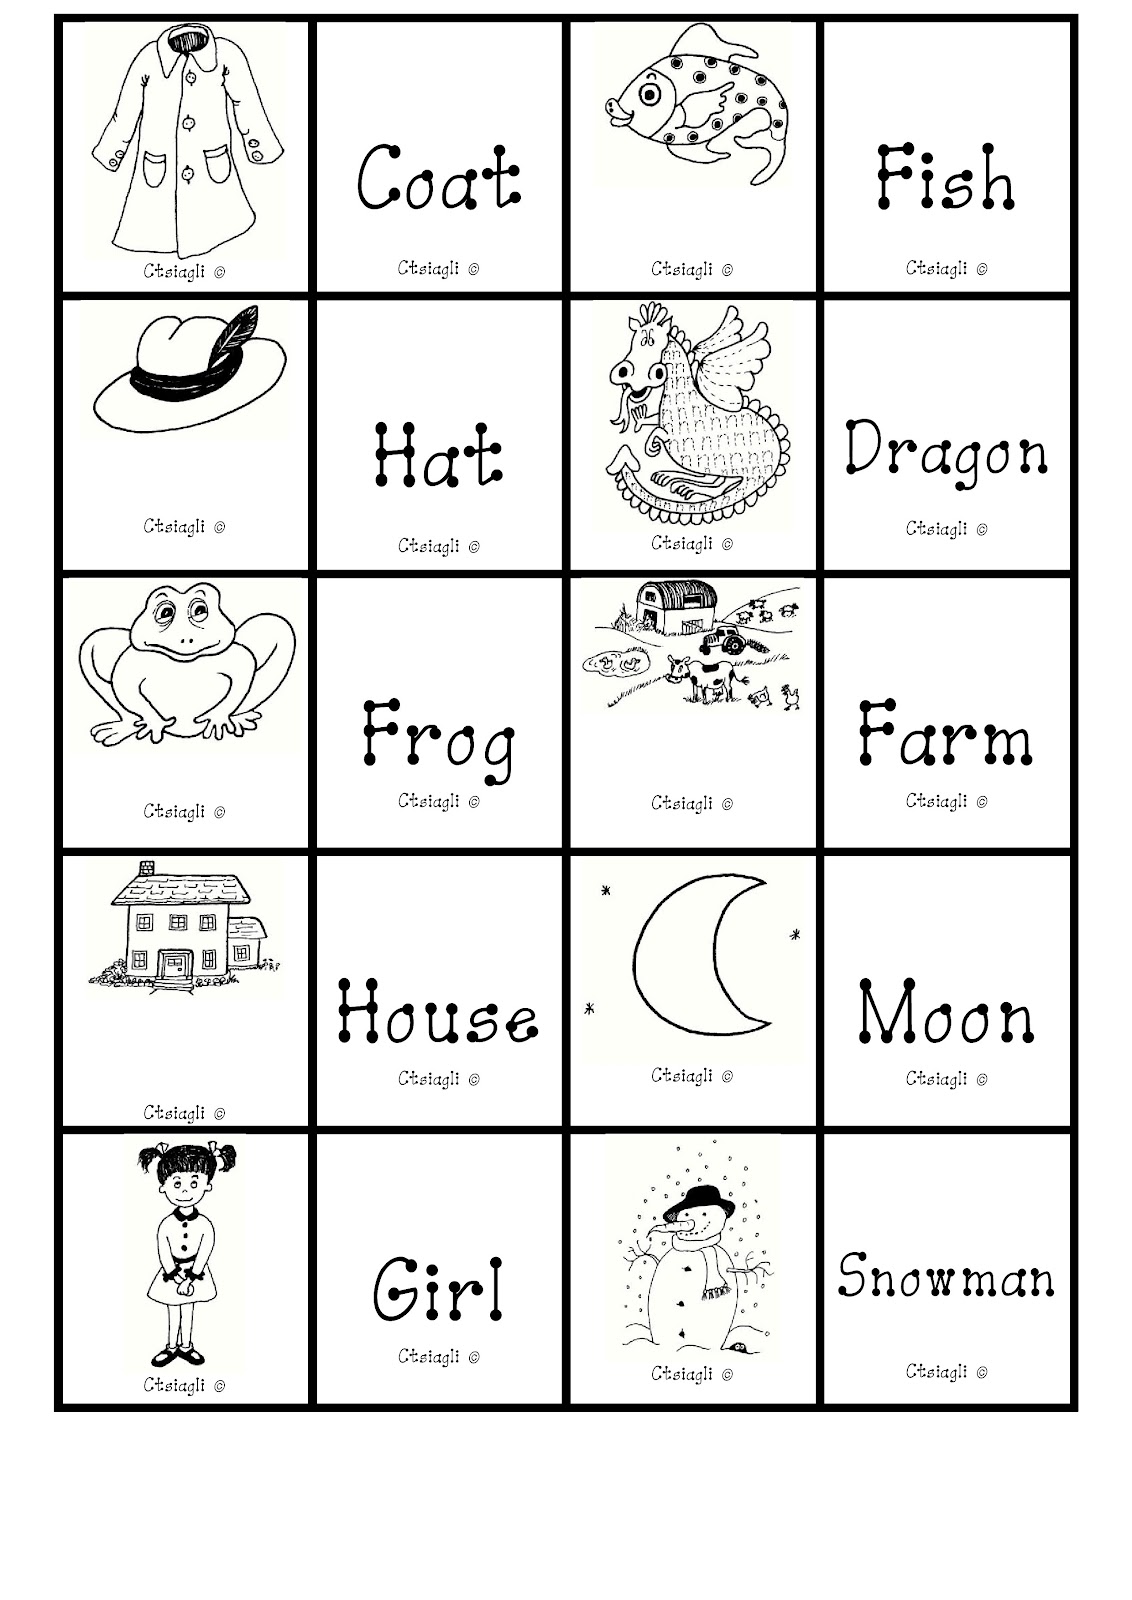 i-teacher-alphabet-games-printable-dominoes